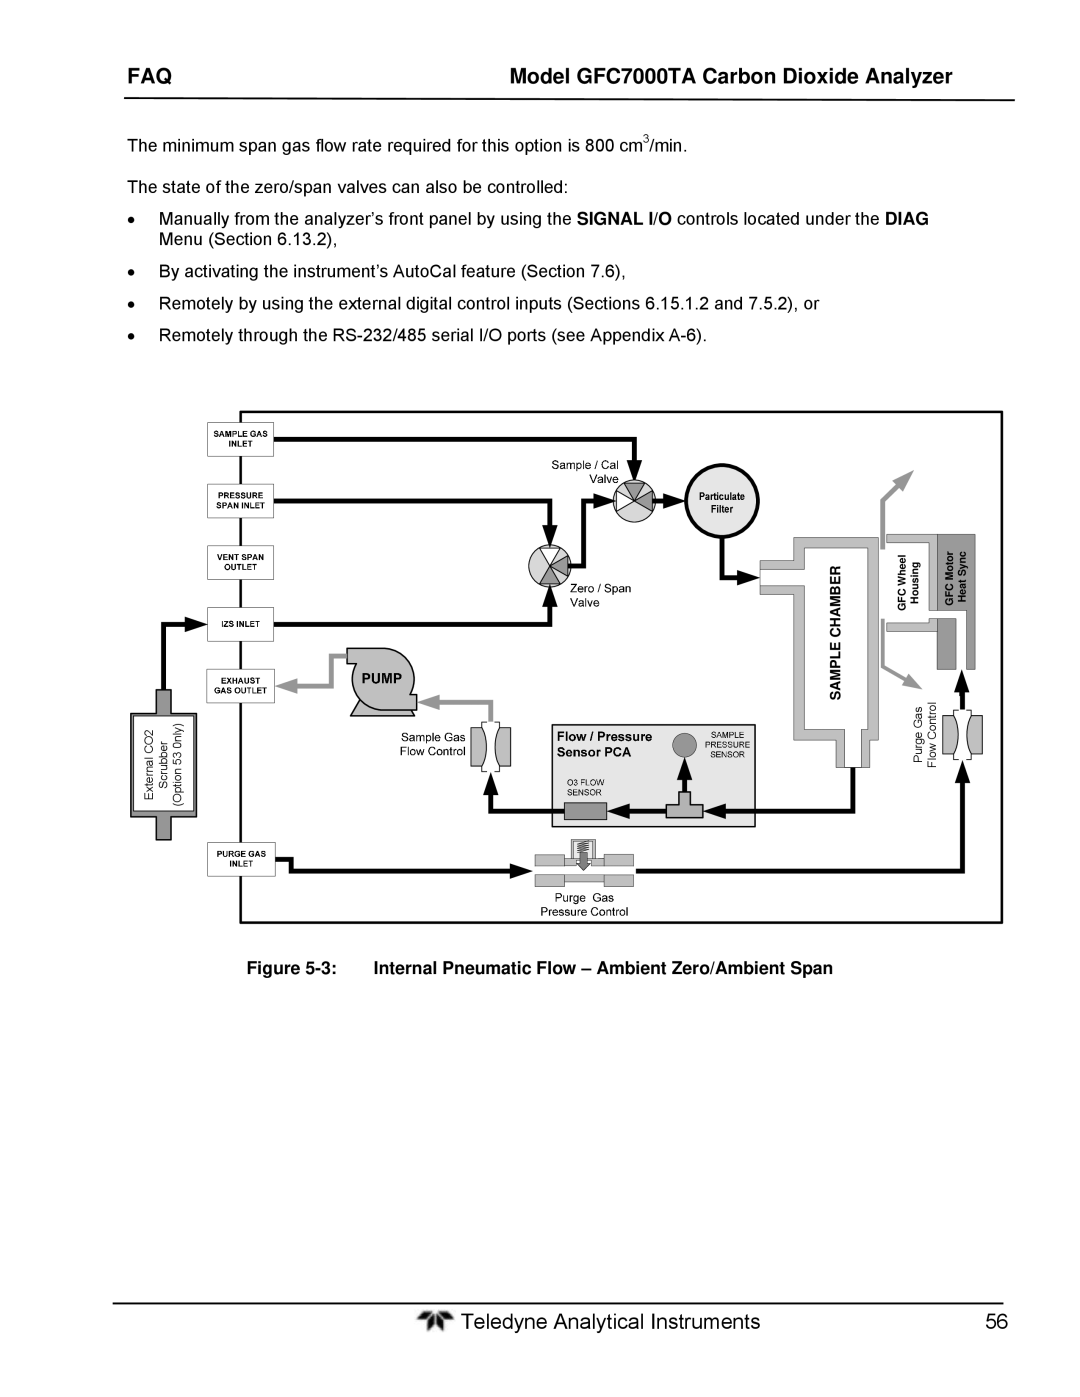 Teledyne gfc 7000ta operation manual Internal Pneumatic Flow Ambient Zero/Ambient Span 